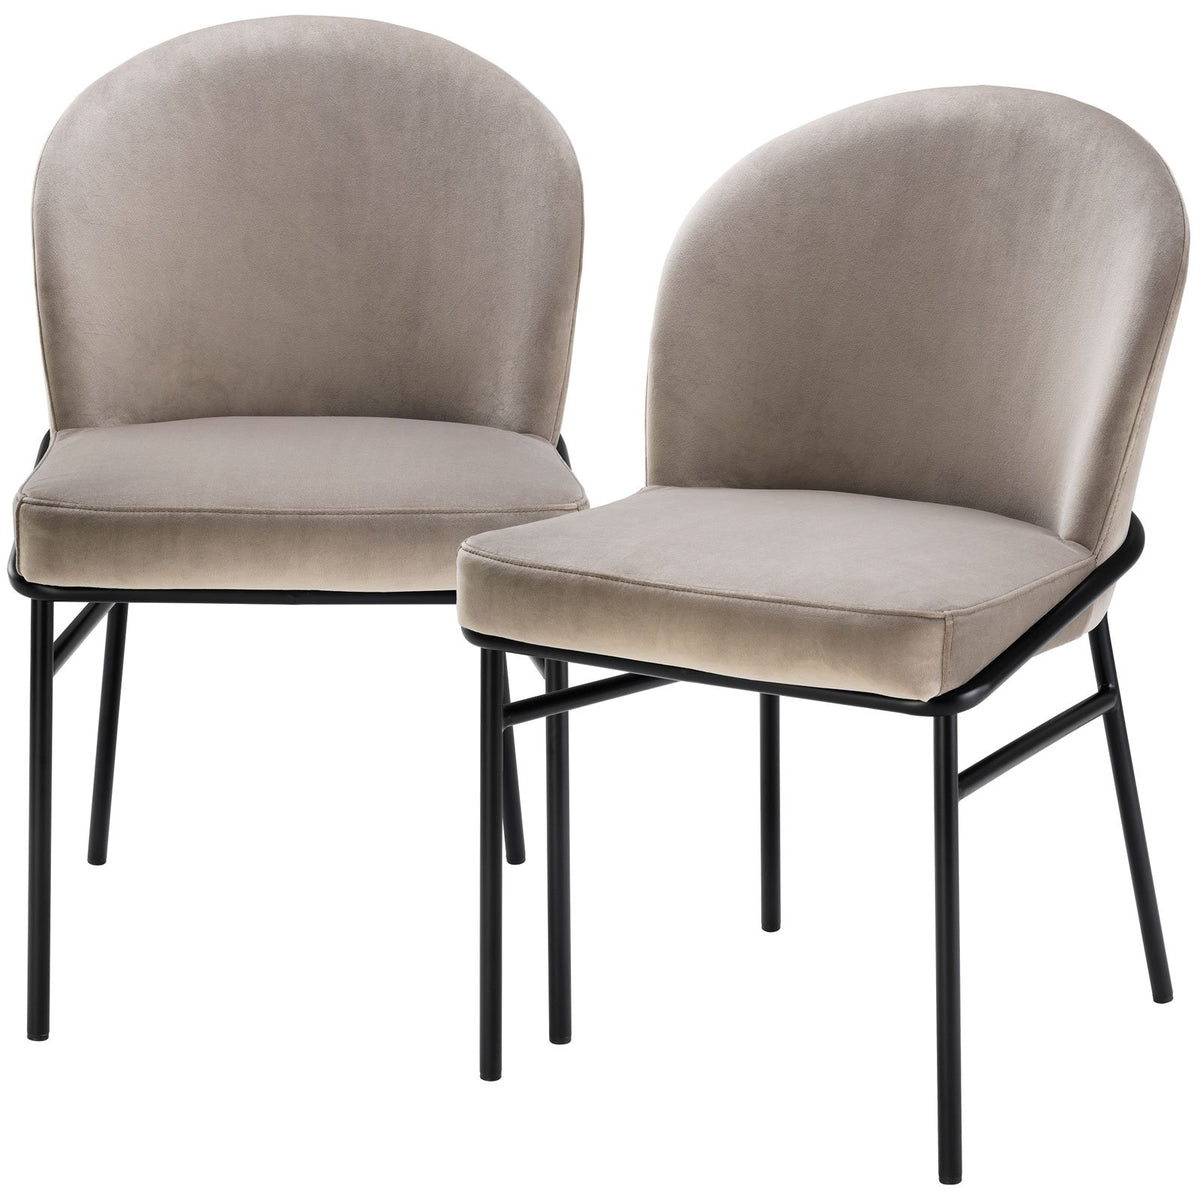 Willis Savona Dining Chairs, Set of 2